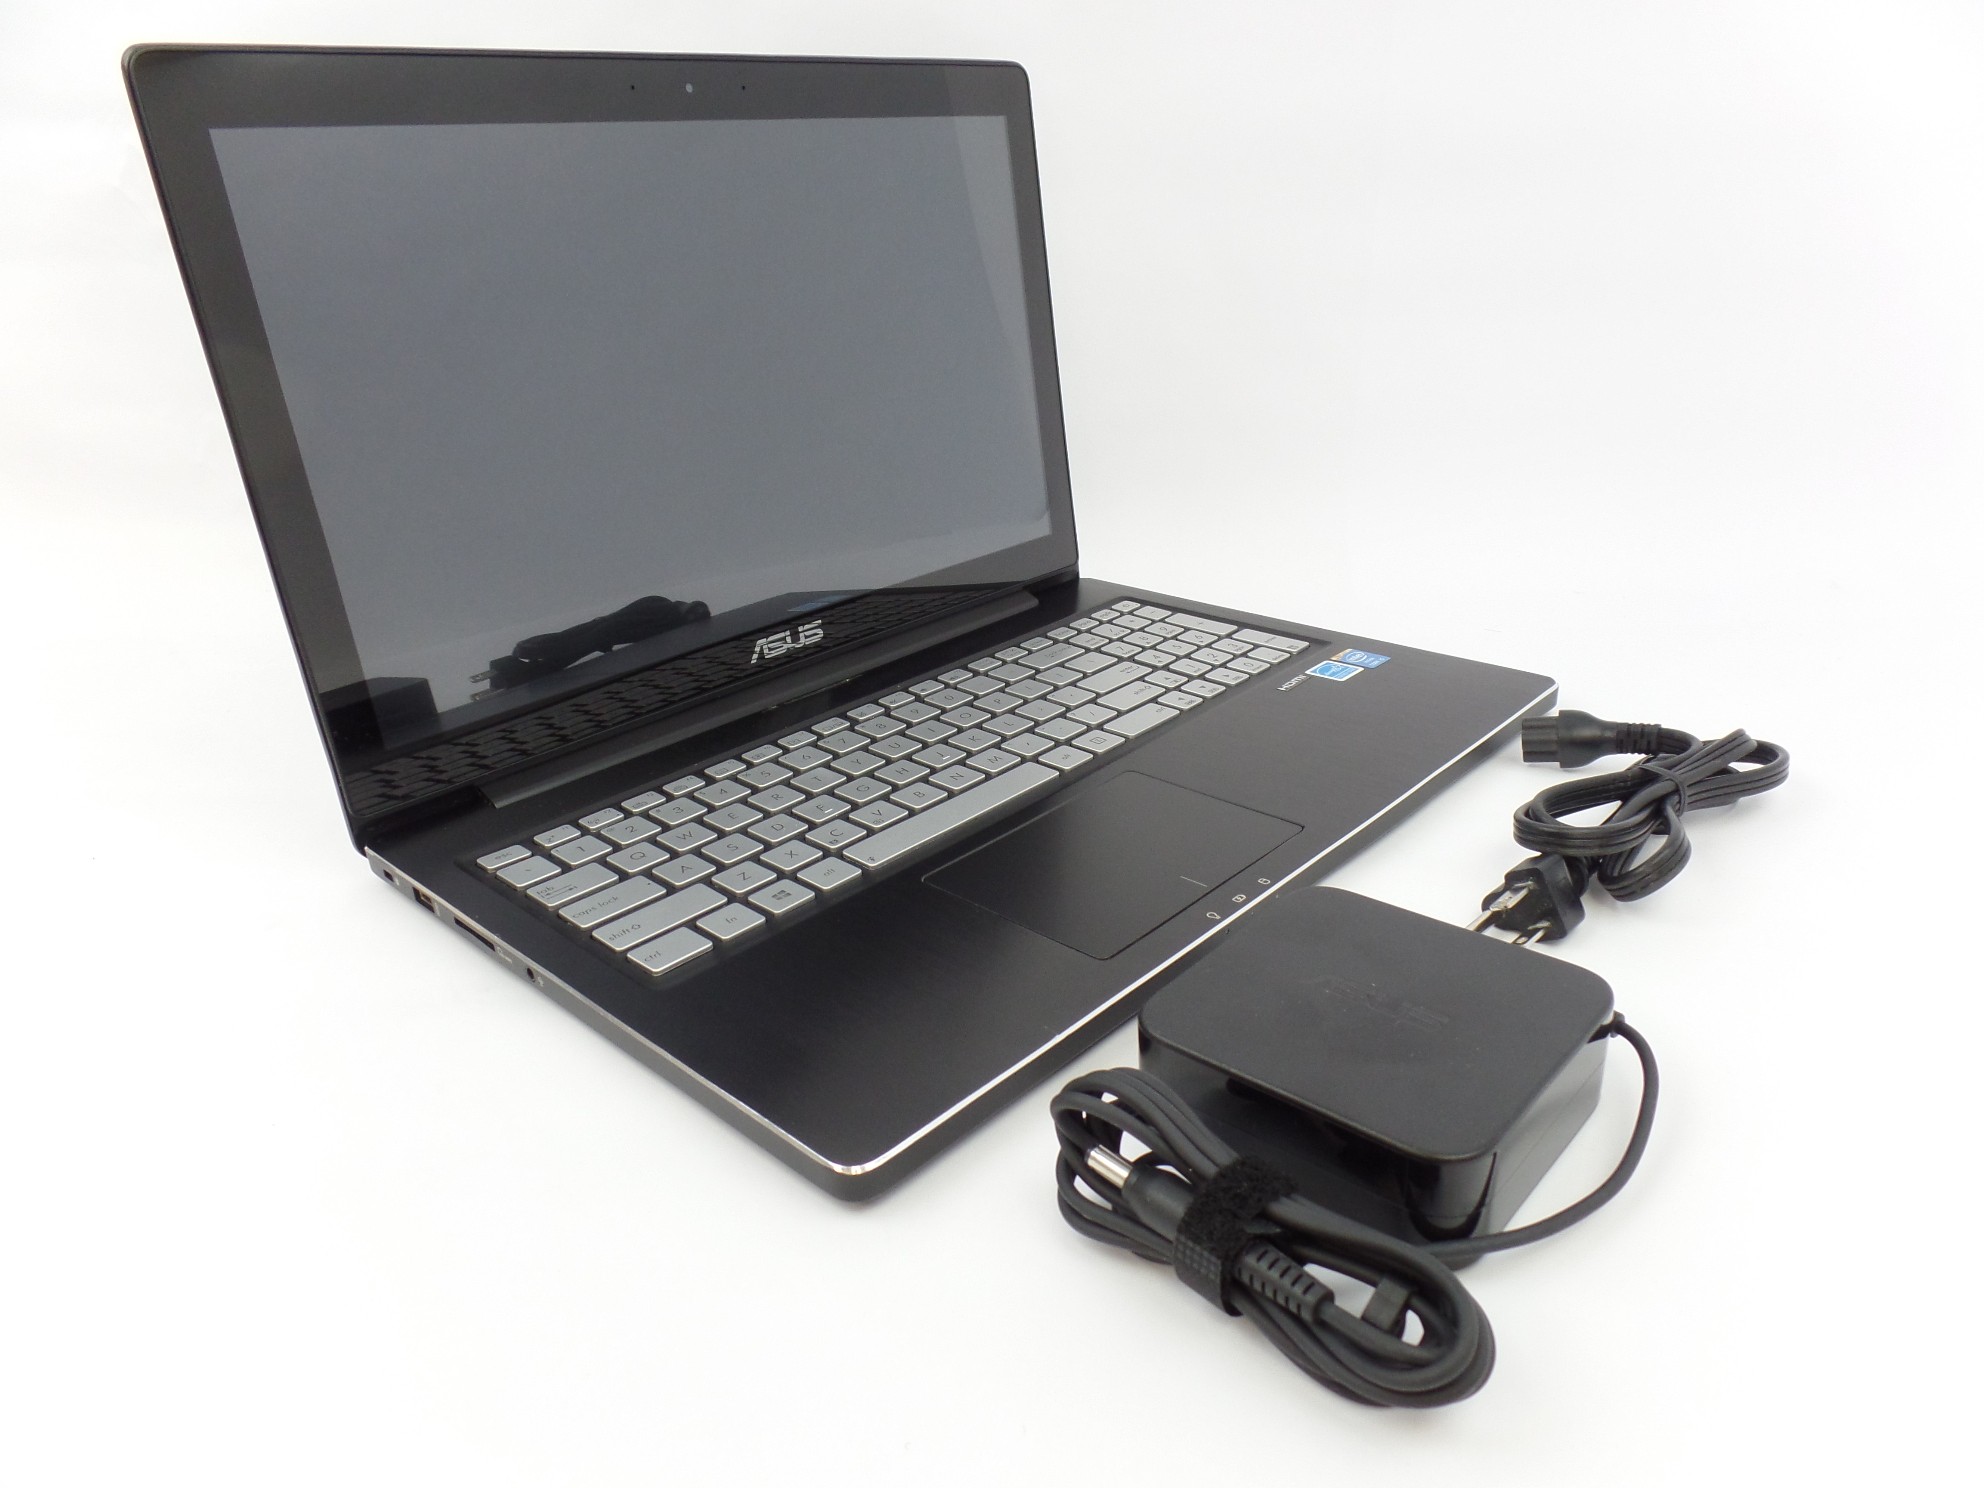 ASUS Q501LA‑BSI5T03 15.6" FHD TouchScreen i5-4200u 1.6GHz 6GB 750GB W10H Laptop